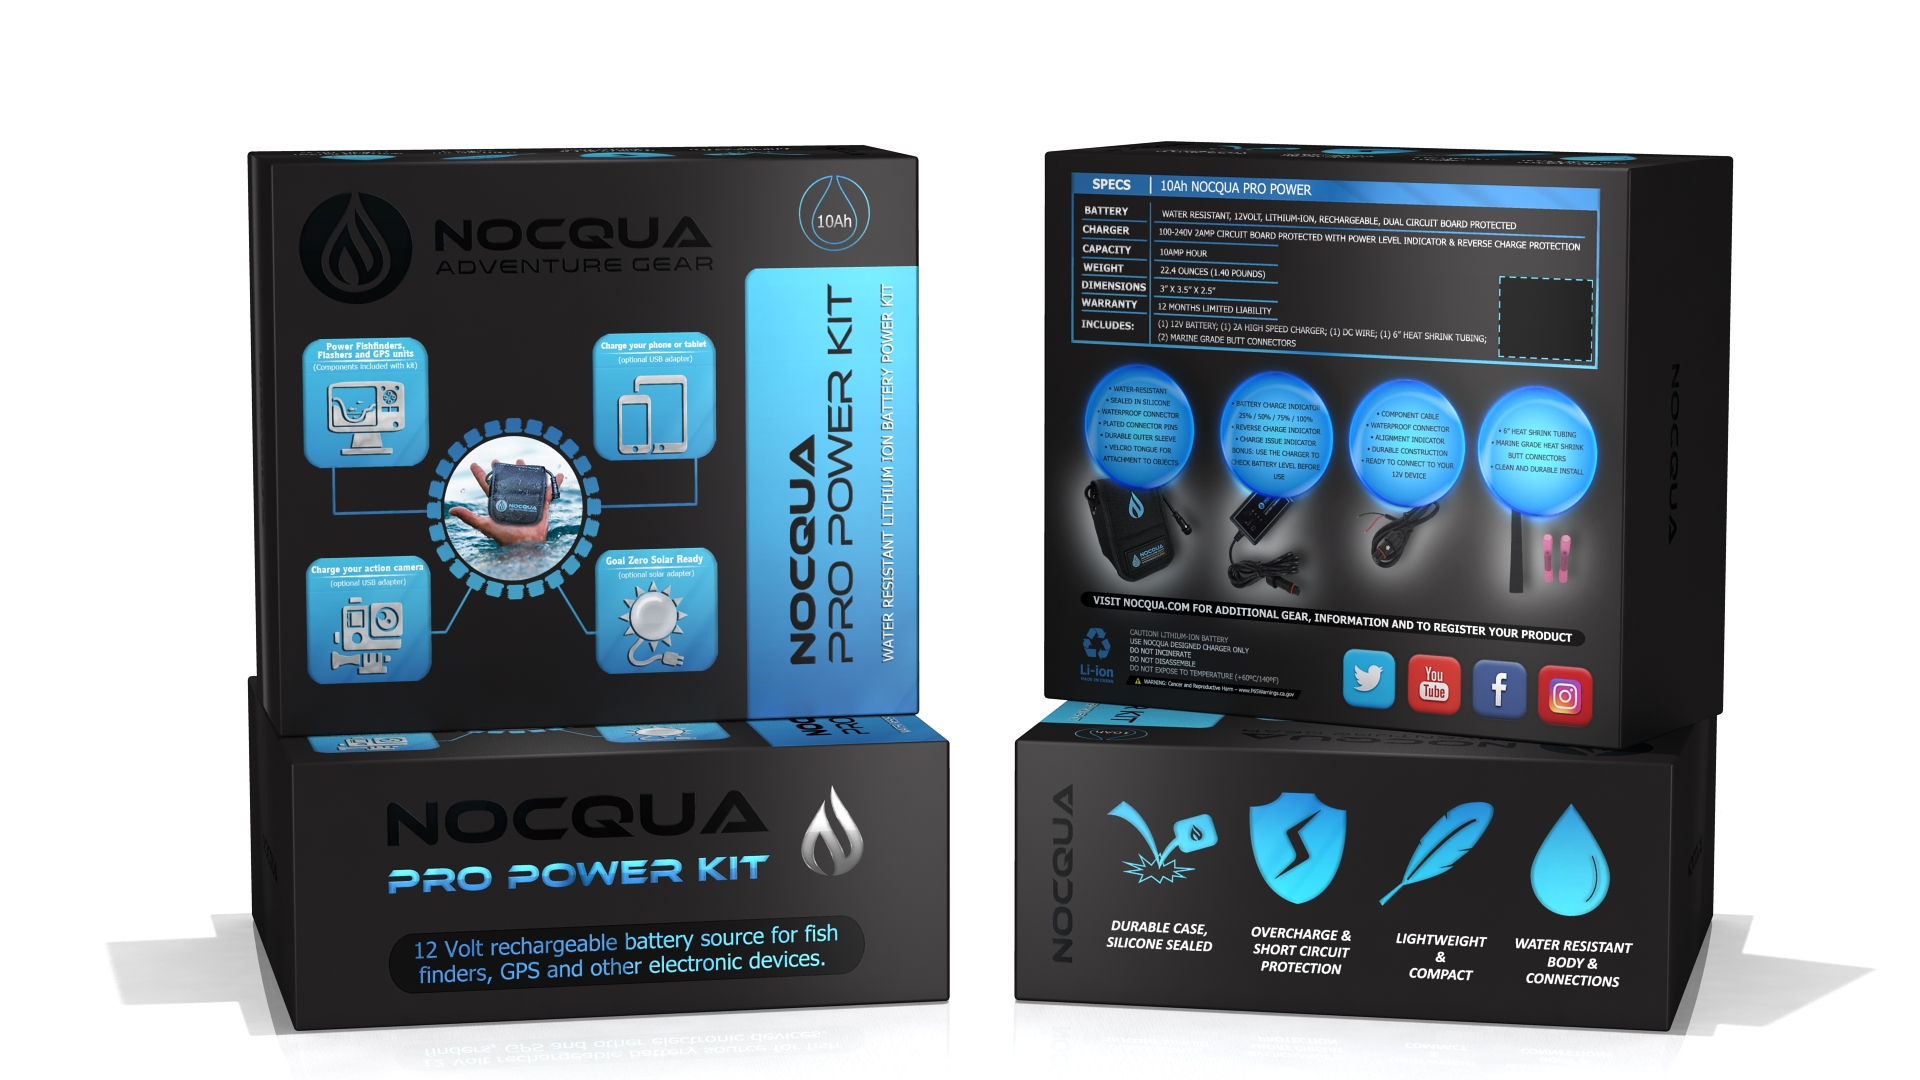 absolutte Billedhugger idiom Pro Power Kit – NOCQUA Adventure Gear